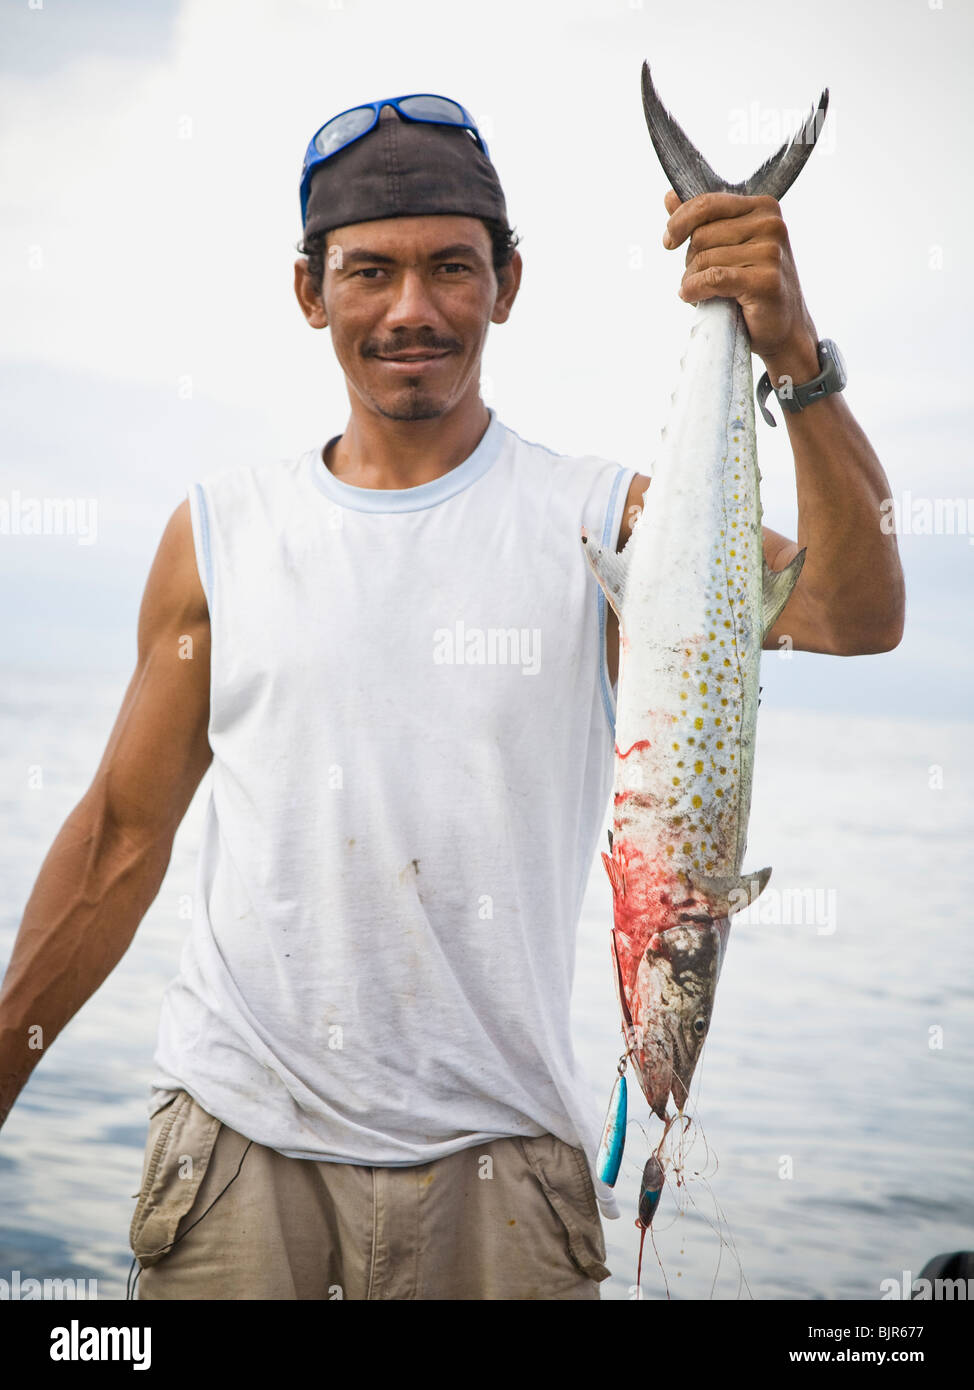 man holding a fish Stock Photo - Alamy